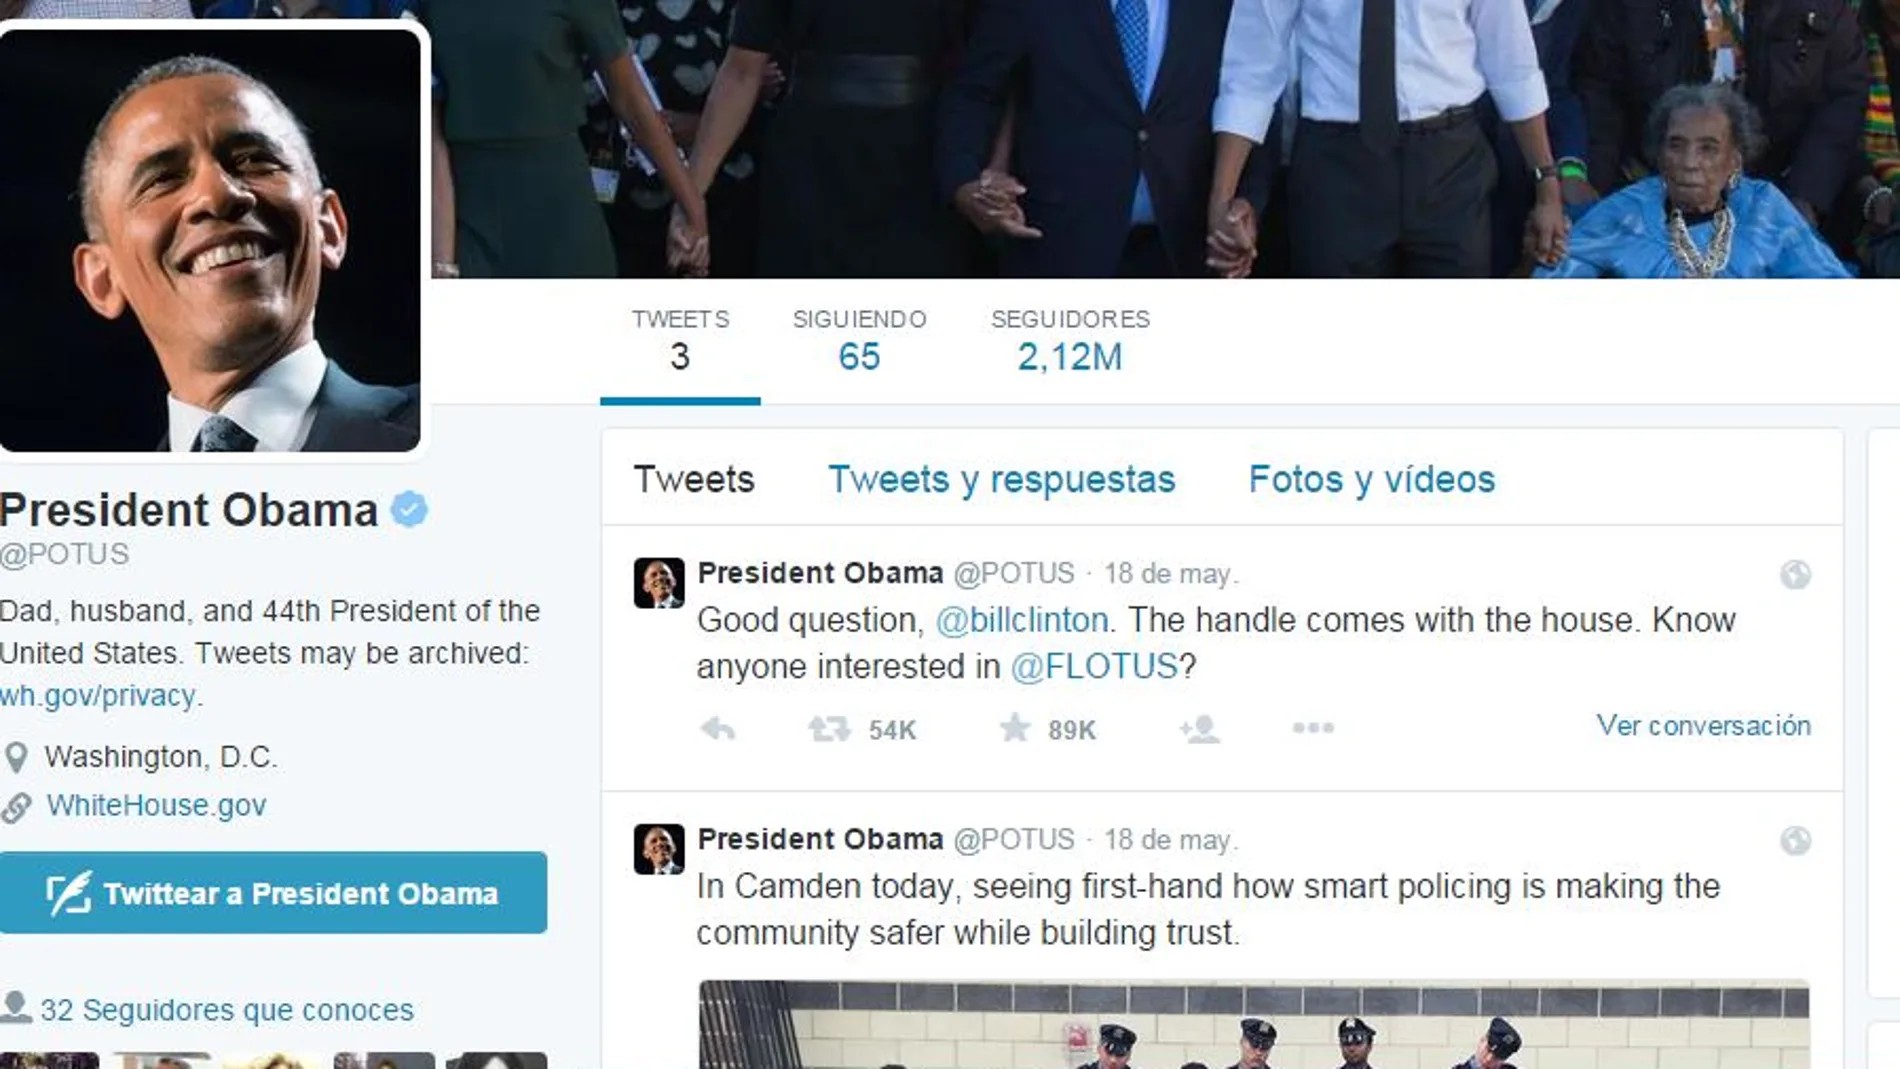 Obama, 55 nuevos seguidores en twitter por segundo